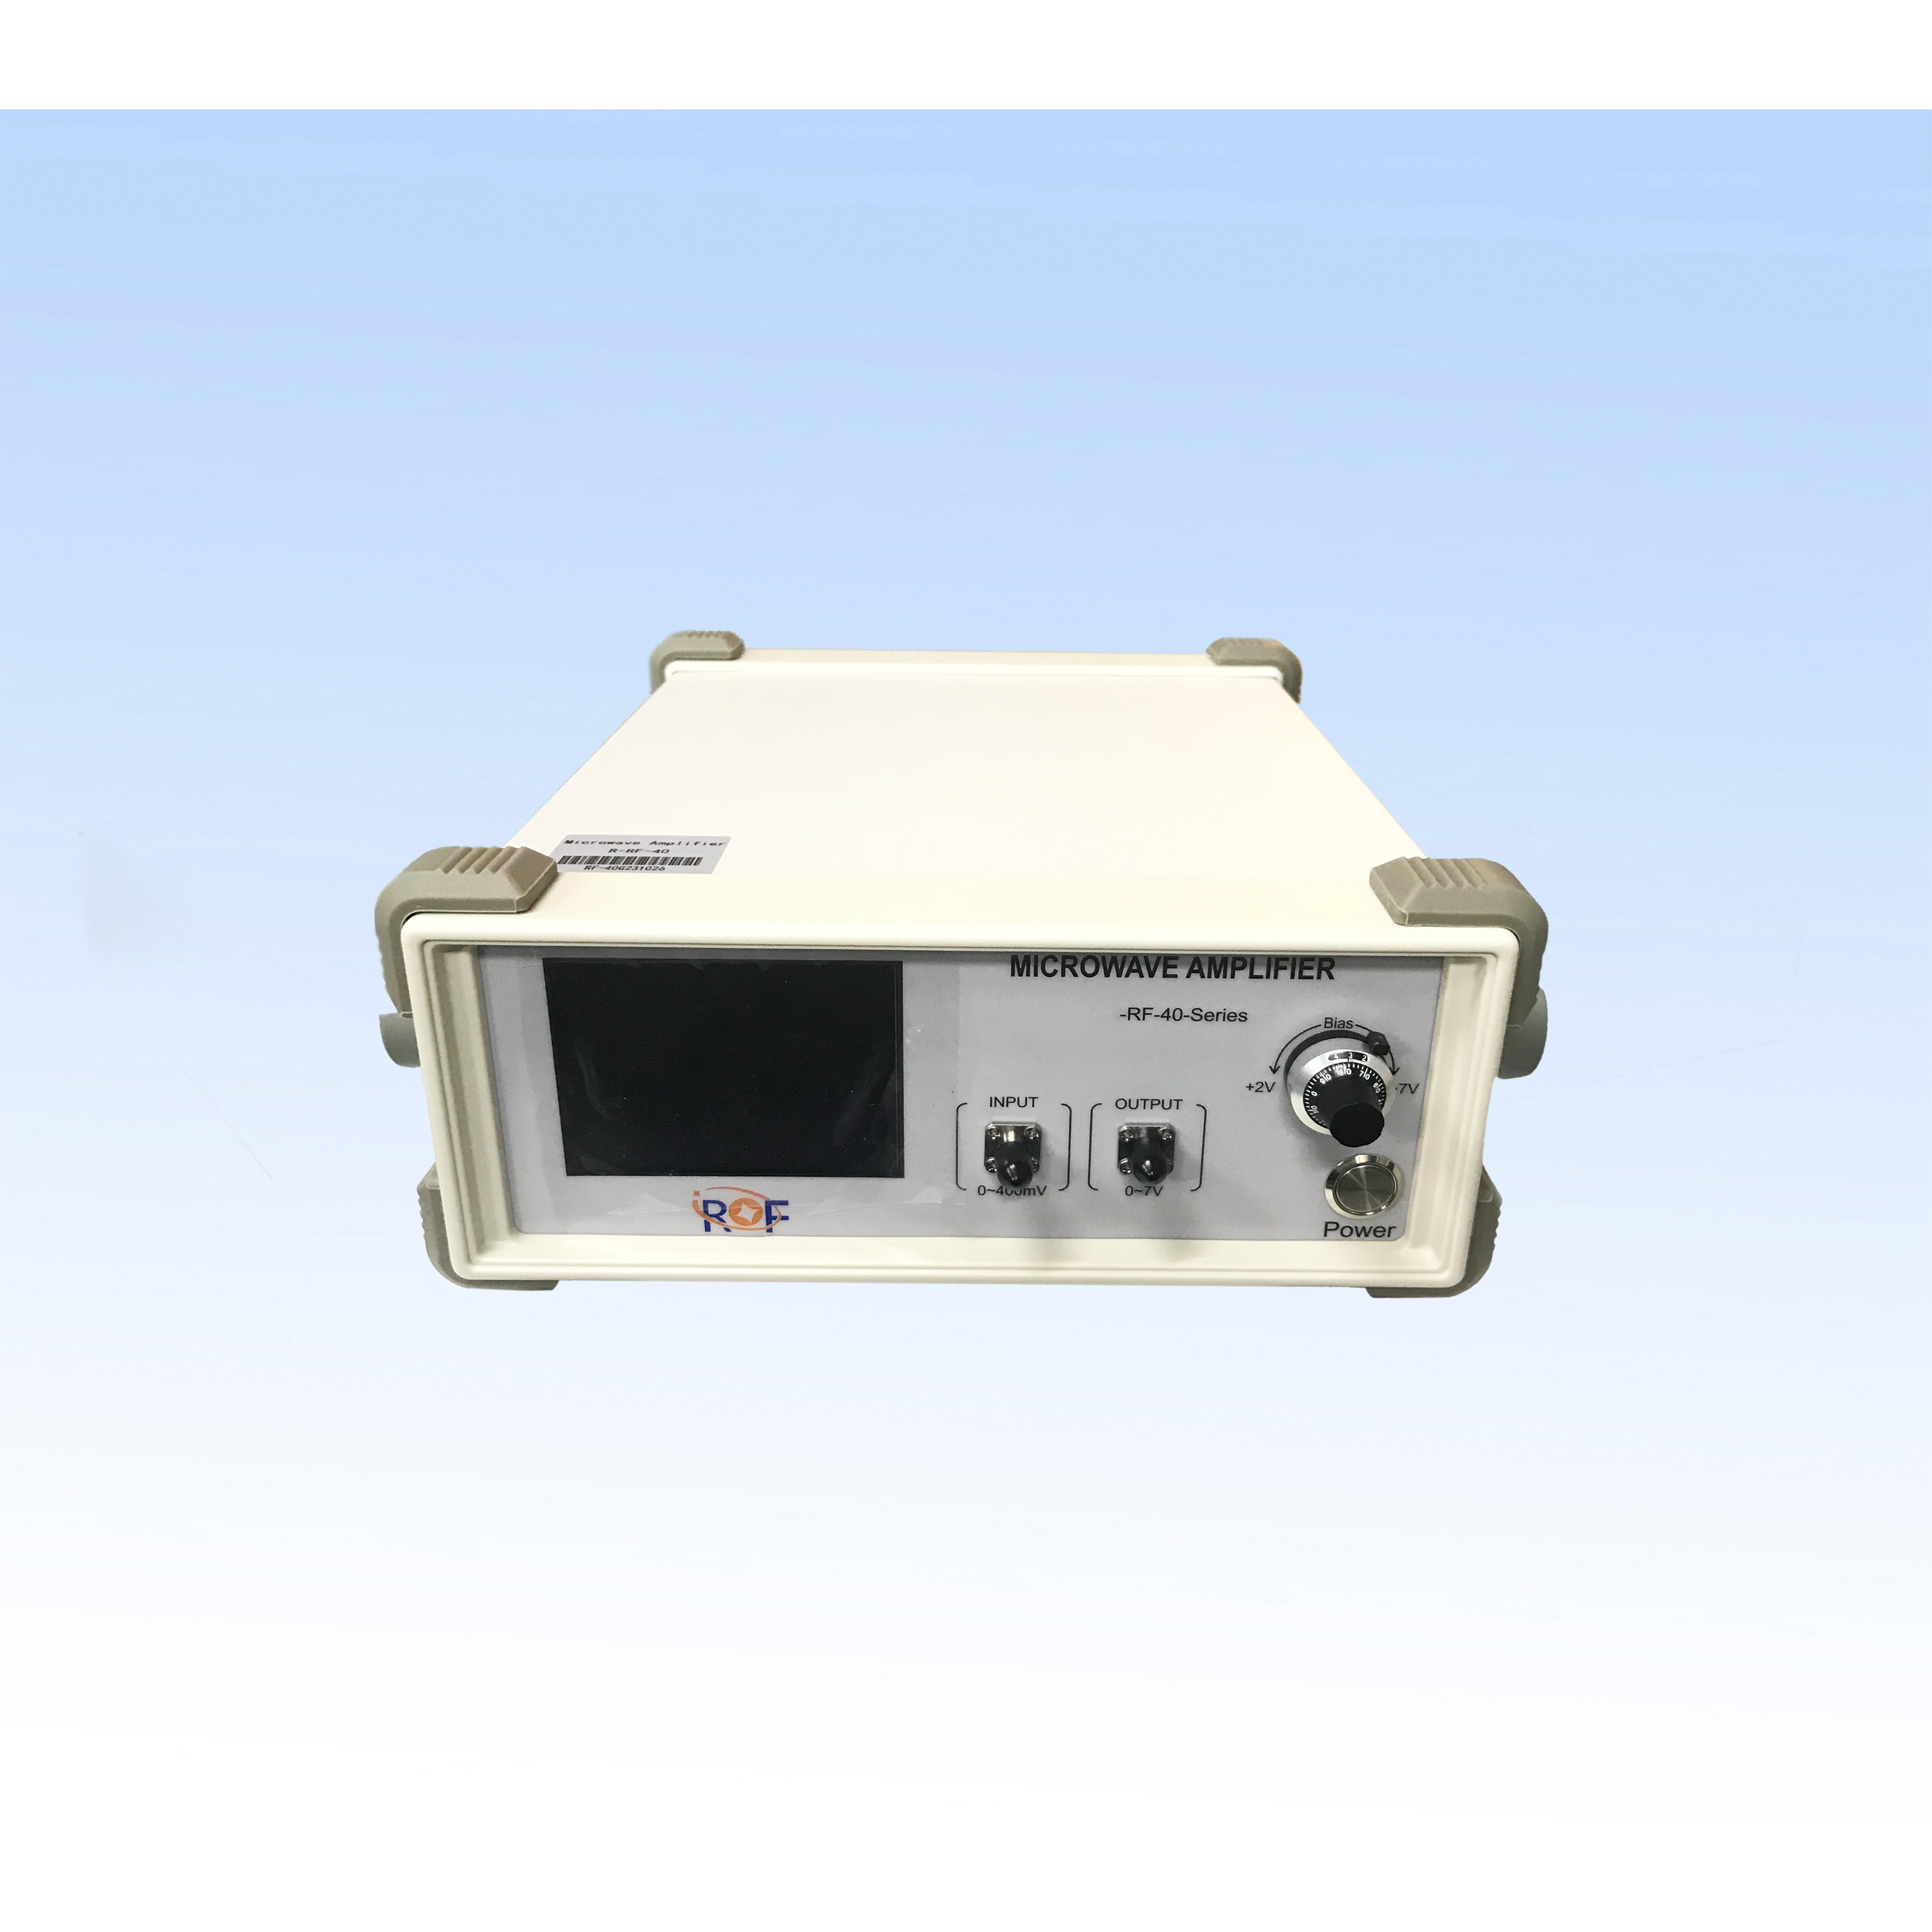 Electro-optic modulator Electro-optical modulator Microwave Amplifier broadband microwave amplifier